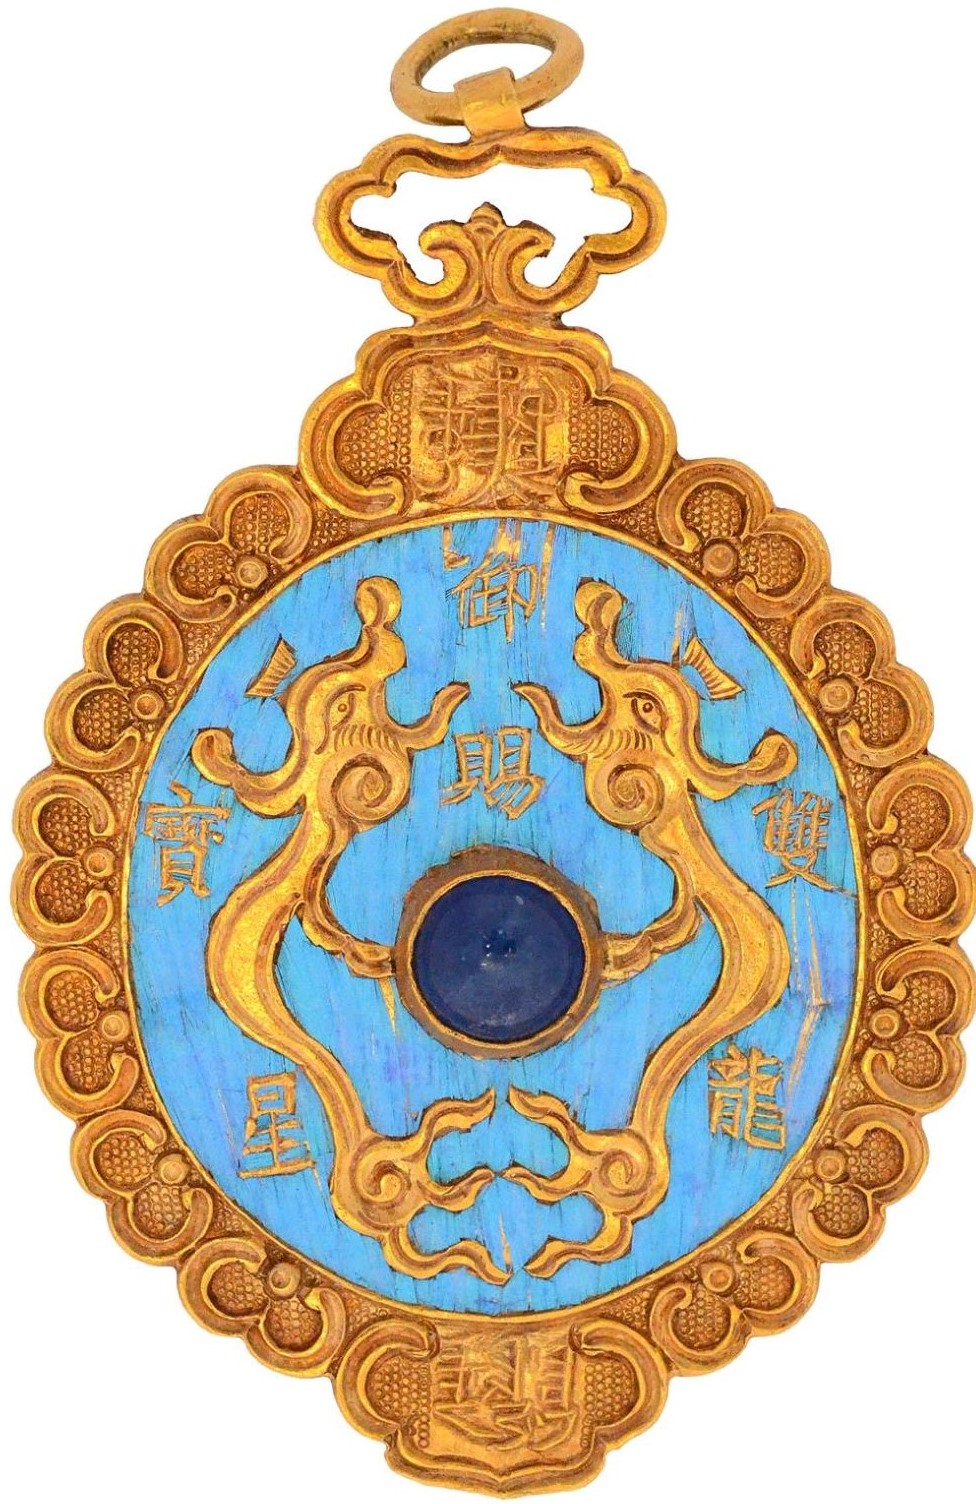 Orders of Double Dragon from the collection of Musée de la Légion d'honneur-.jpg